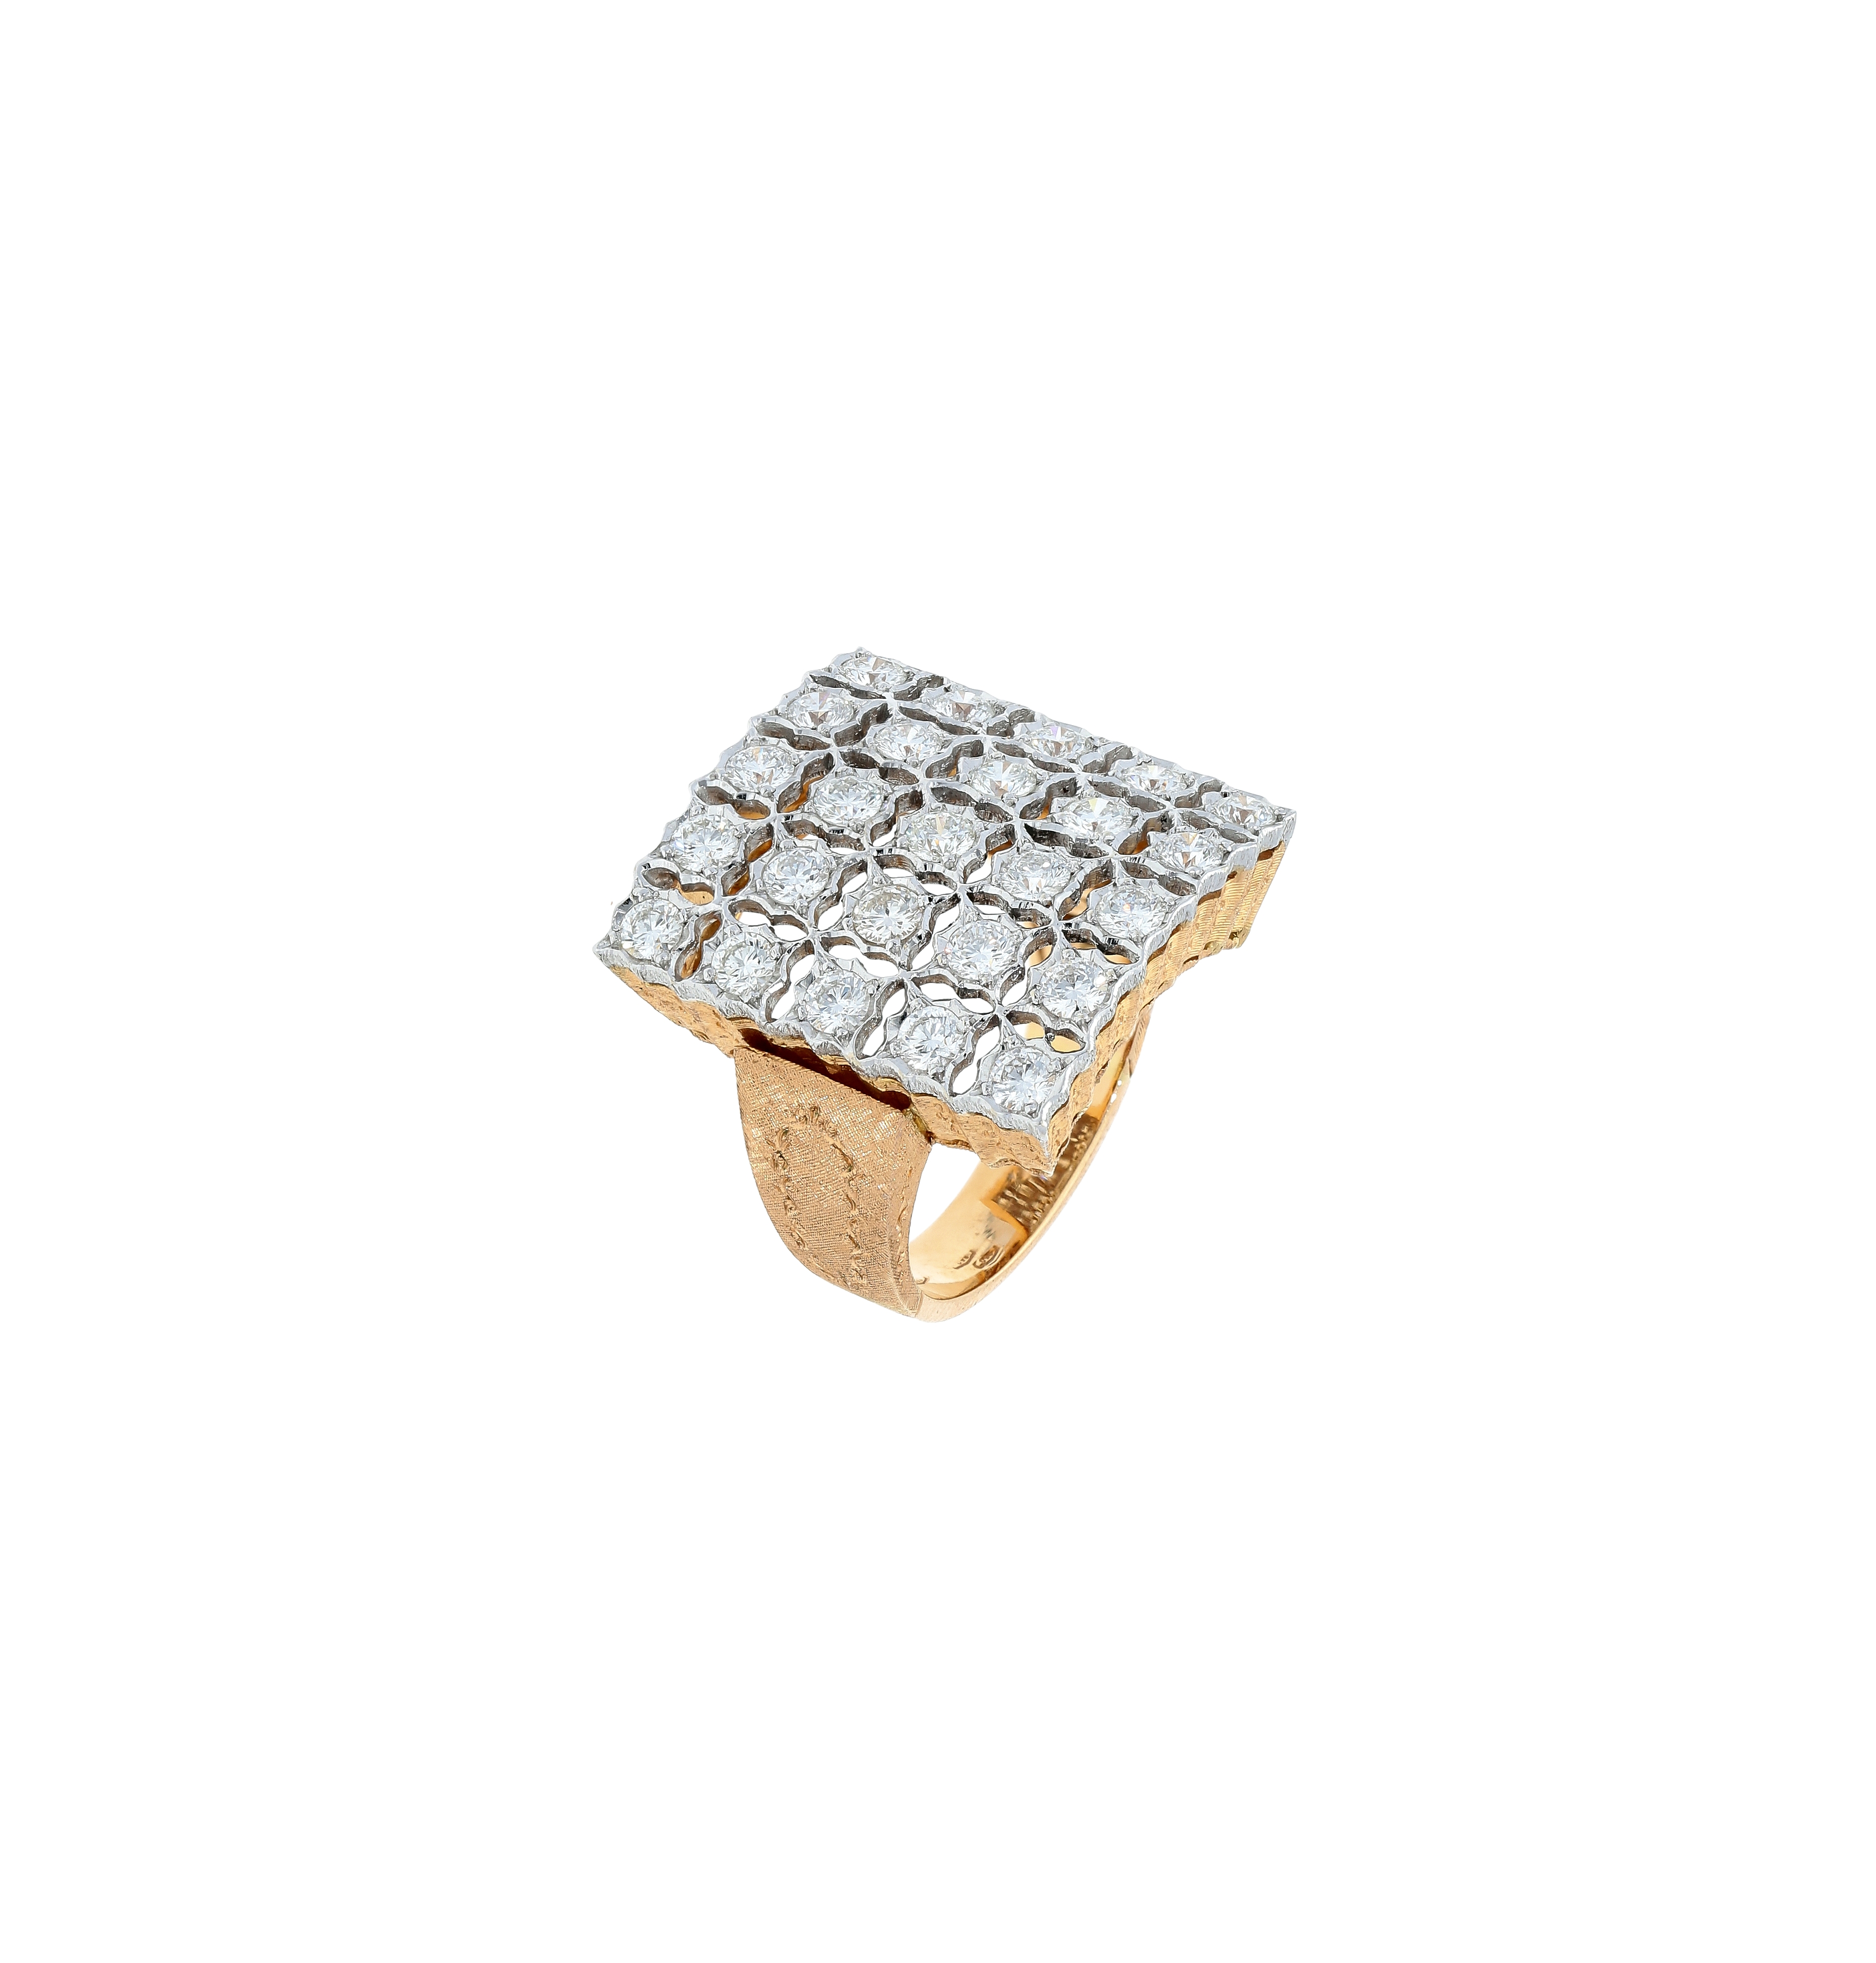 Florentine diamond ring 18kt rose and white gold